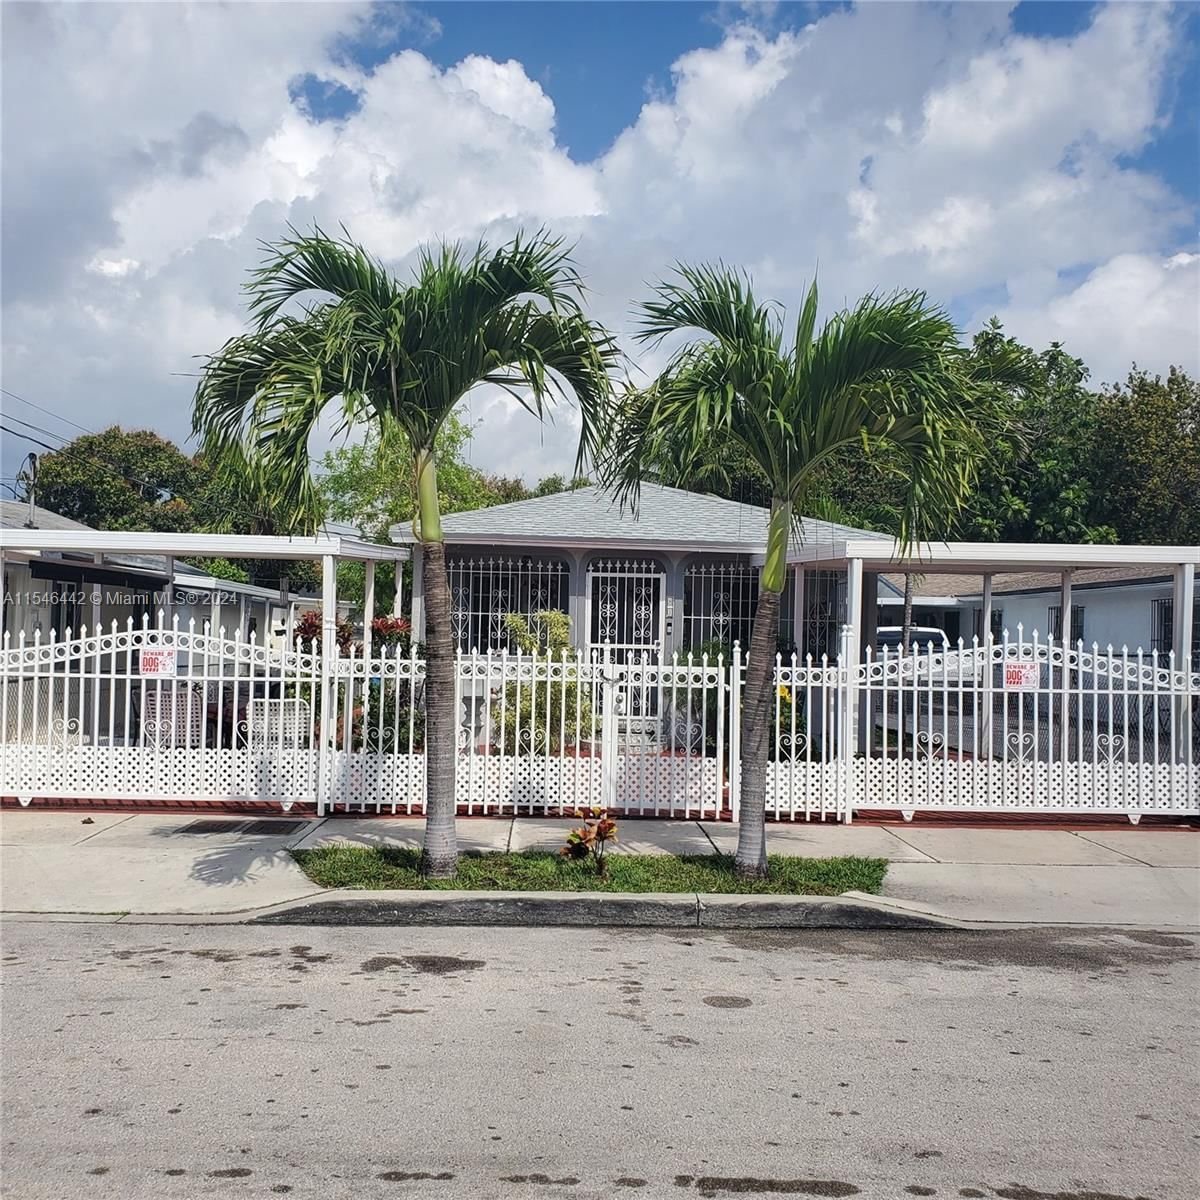 Real estate property located at 81 44 ST, Miami-Dade County, BUENA VISTA HGTS ADD AMD, Miami, FL